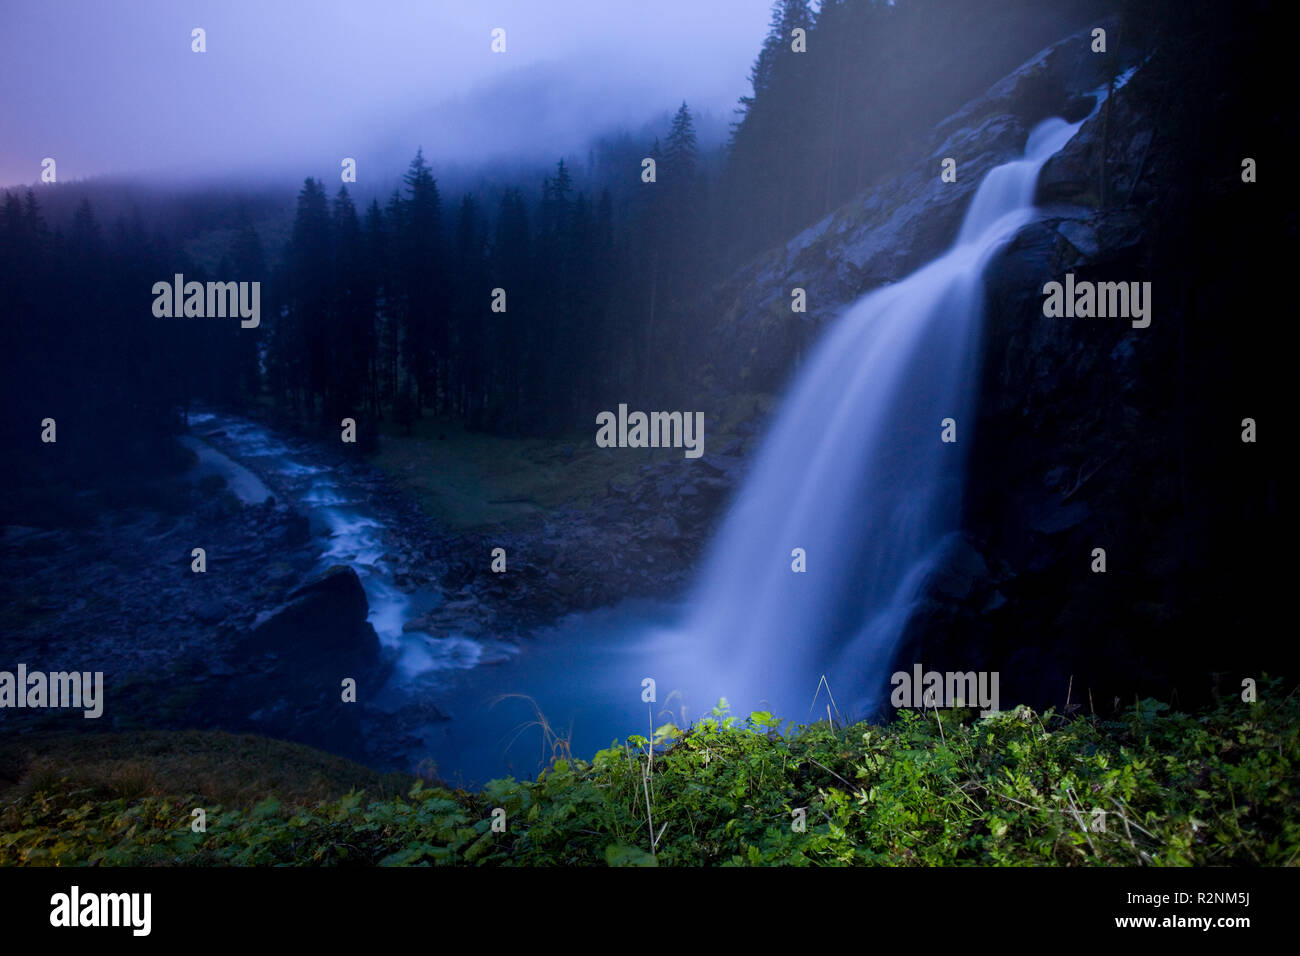 Krimml Waterfalls at dawn, High Tauern, Austria Stock Photo